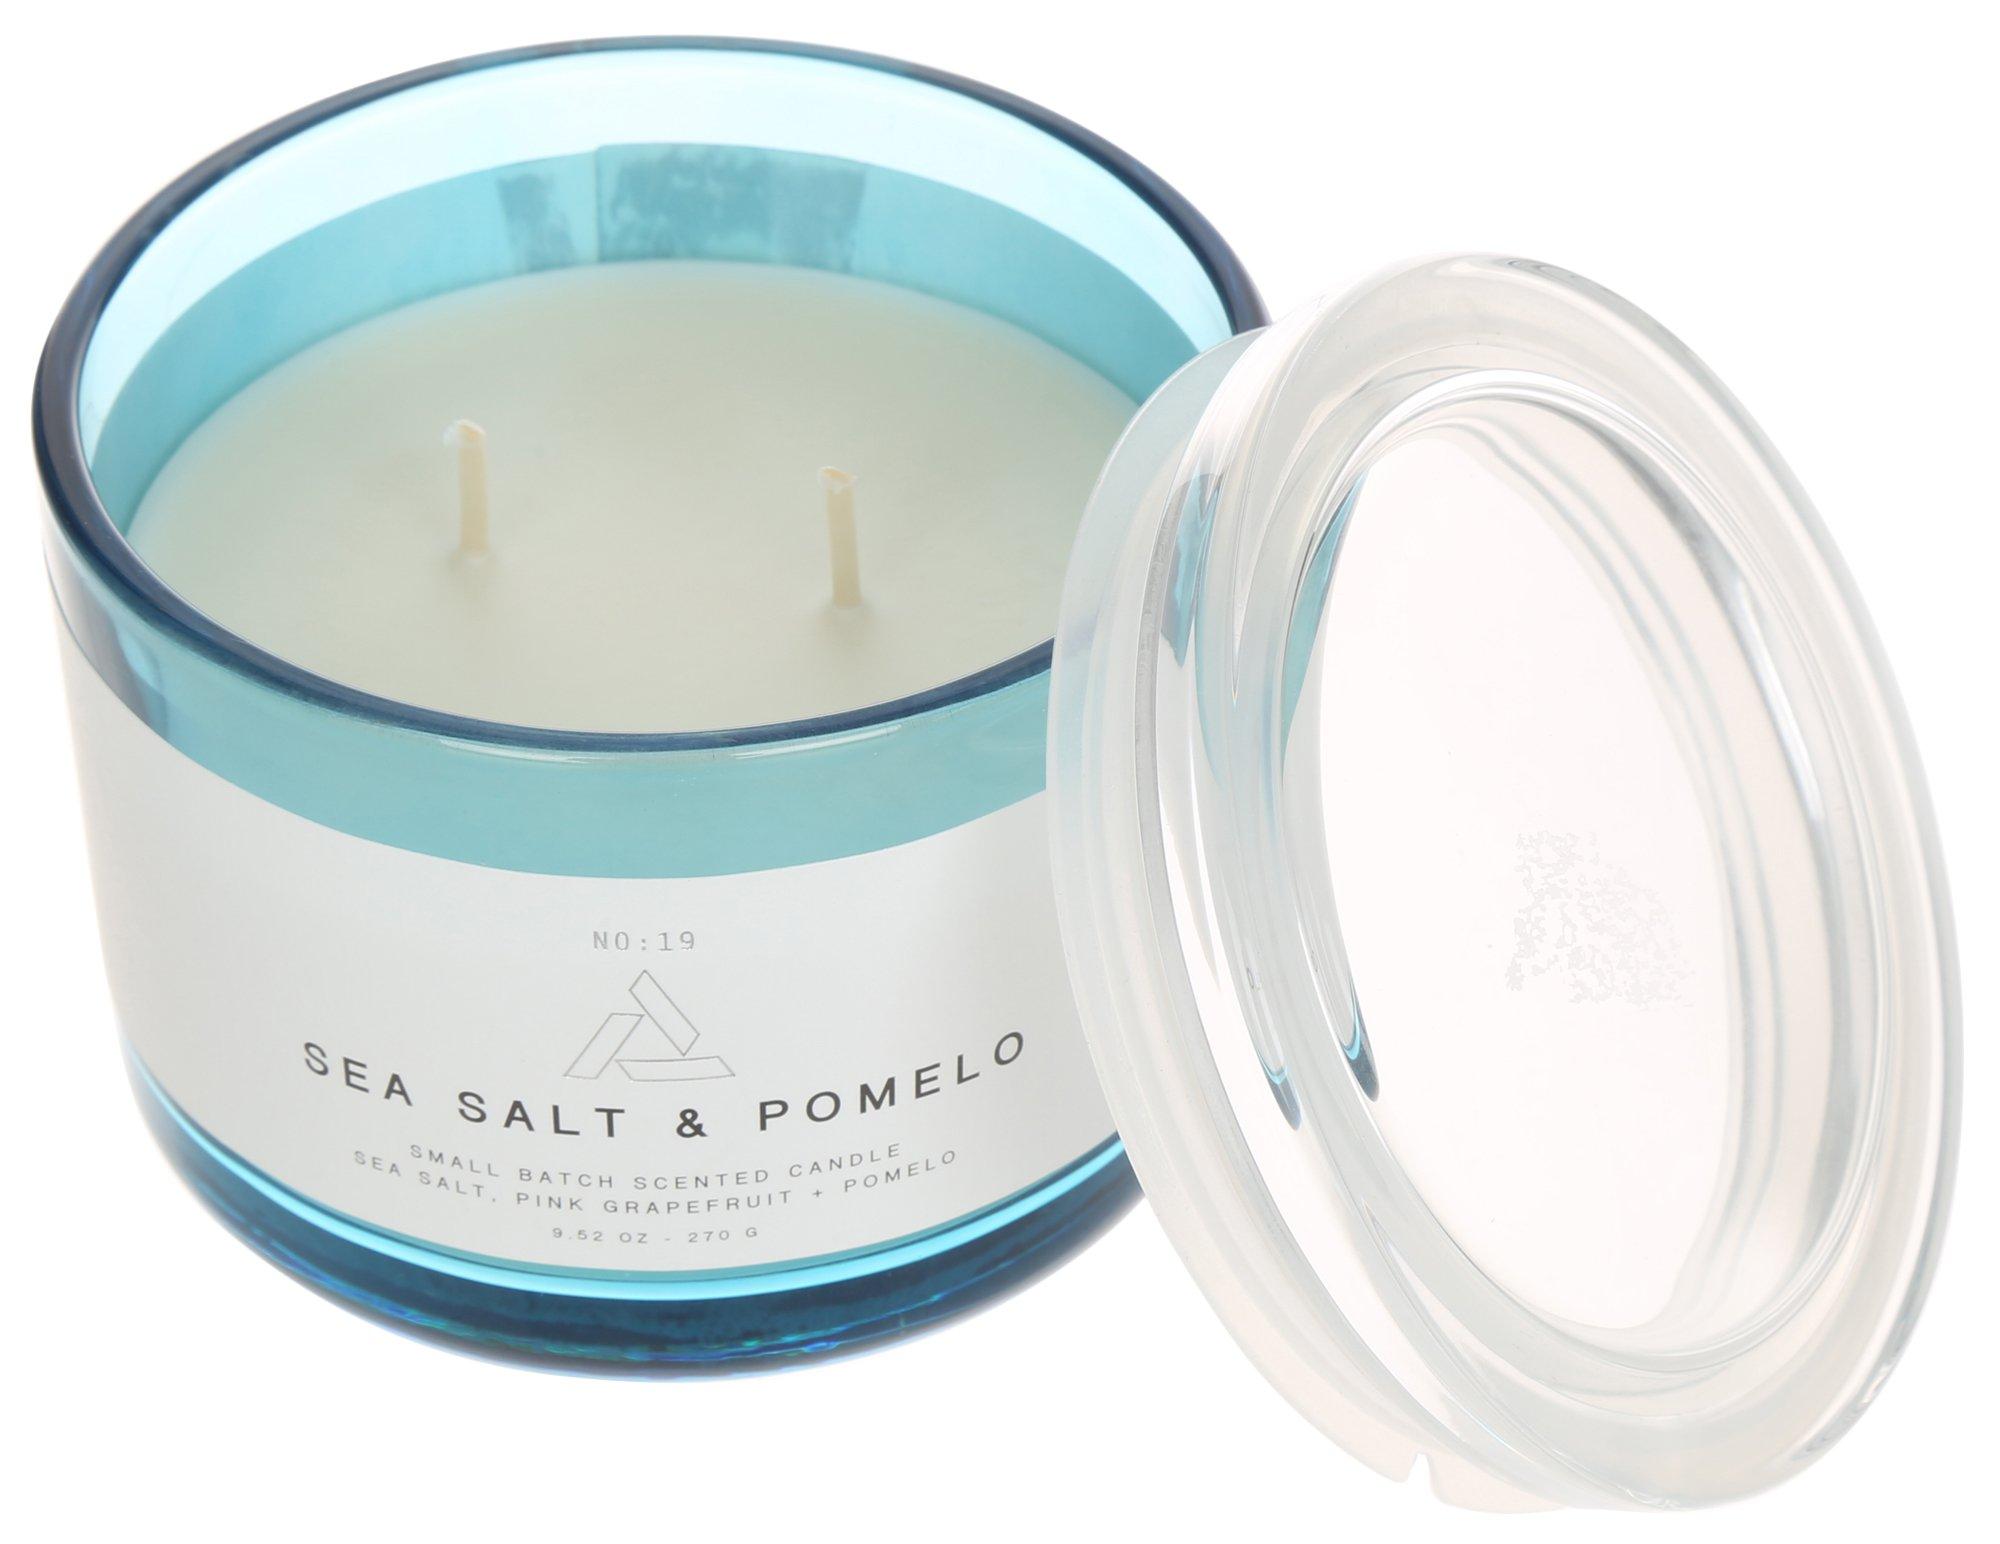 9 oz Sea Salt & Pomelo Scented Candle